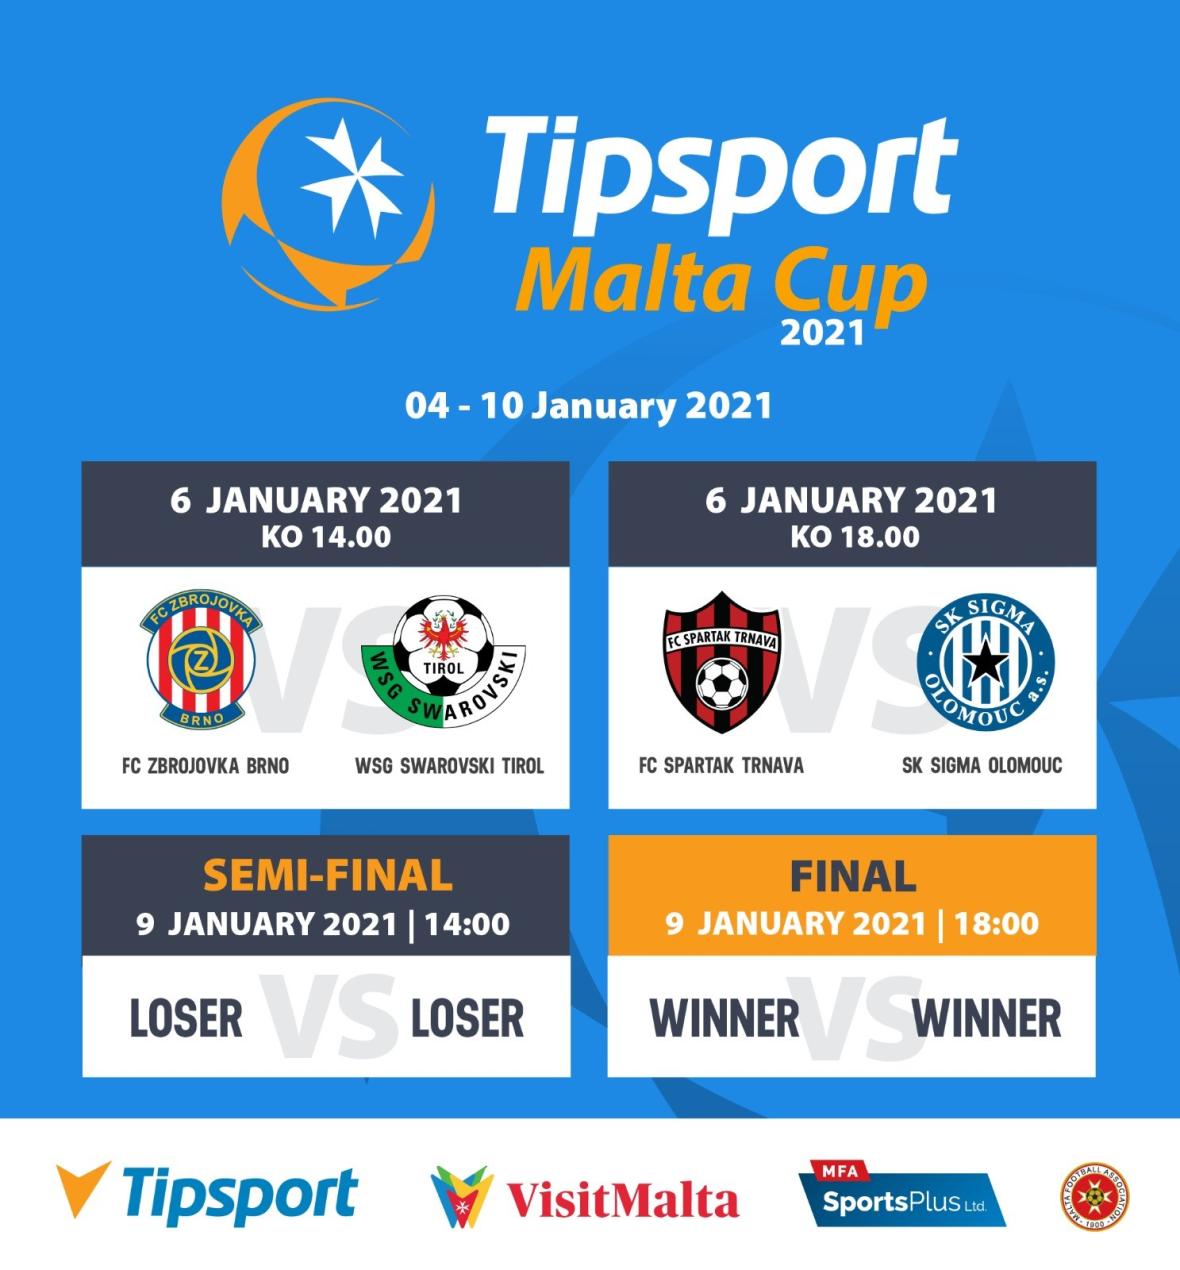 Tipsport Malta Cup 